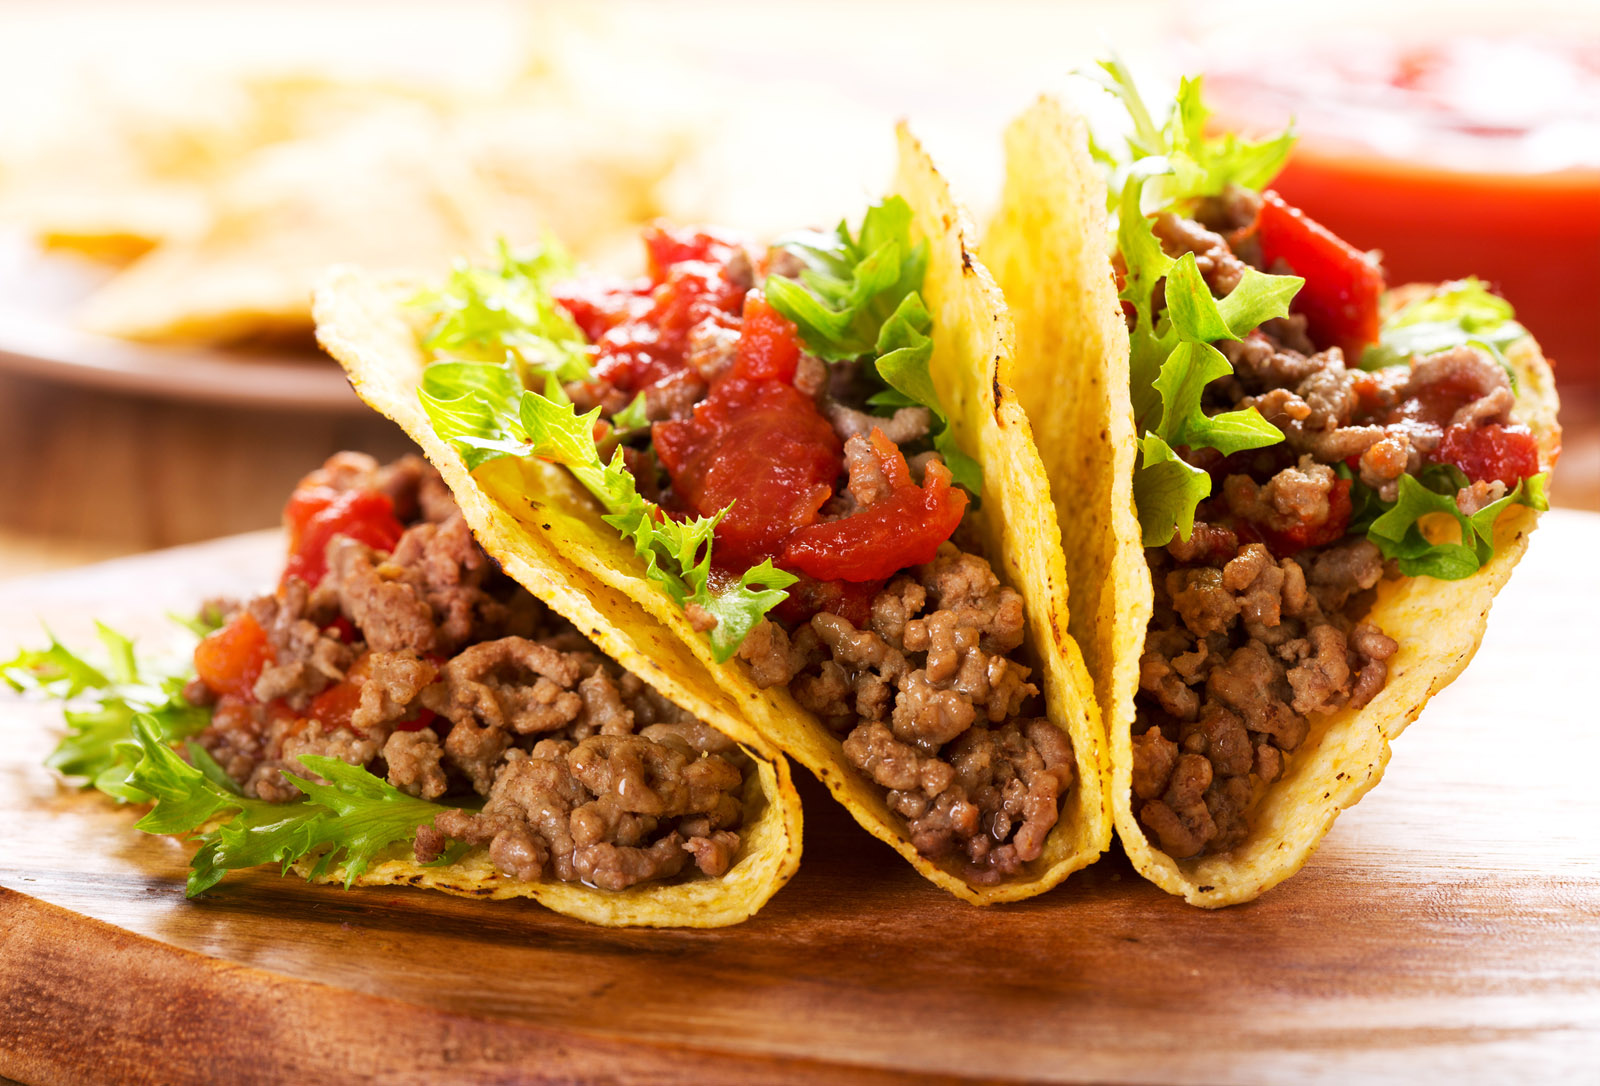 Enjoy these tacos. (Thinkstock)